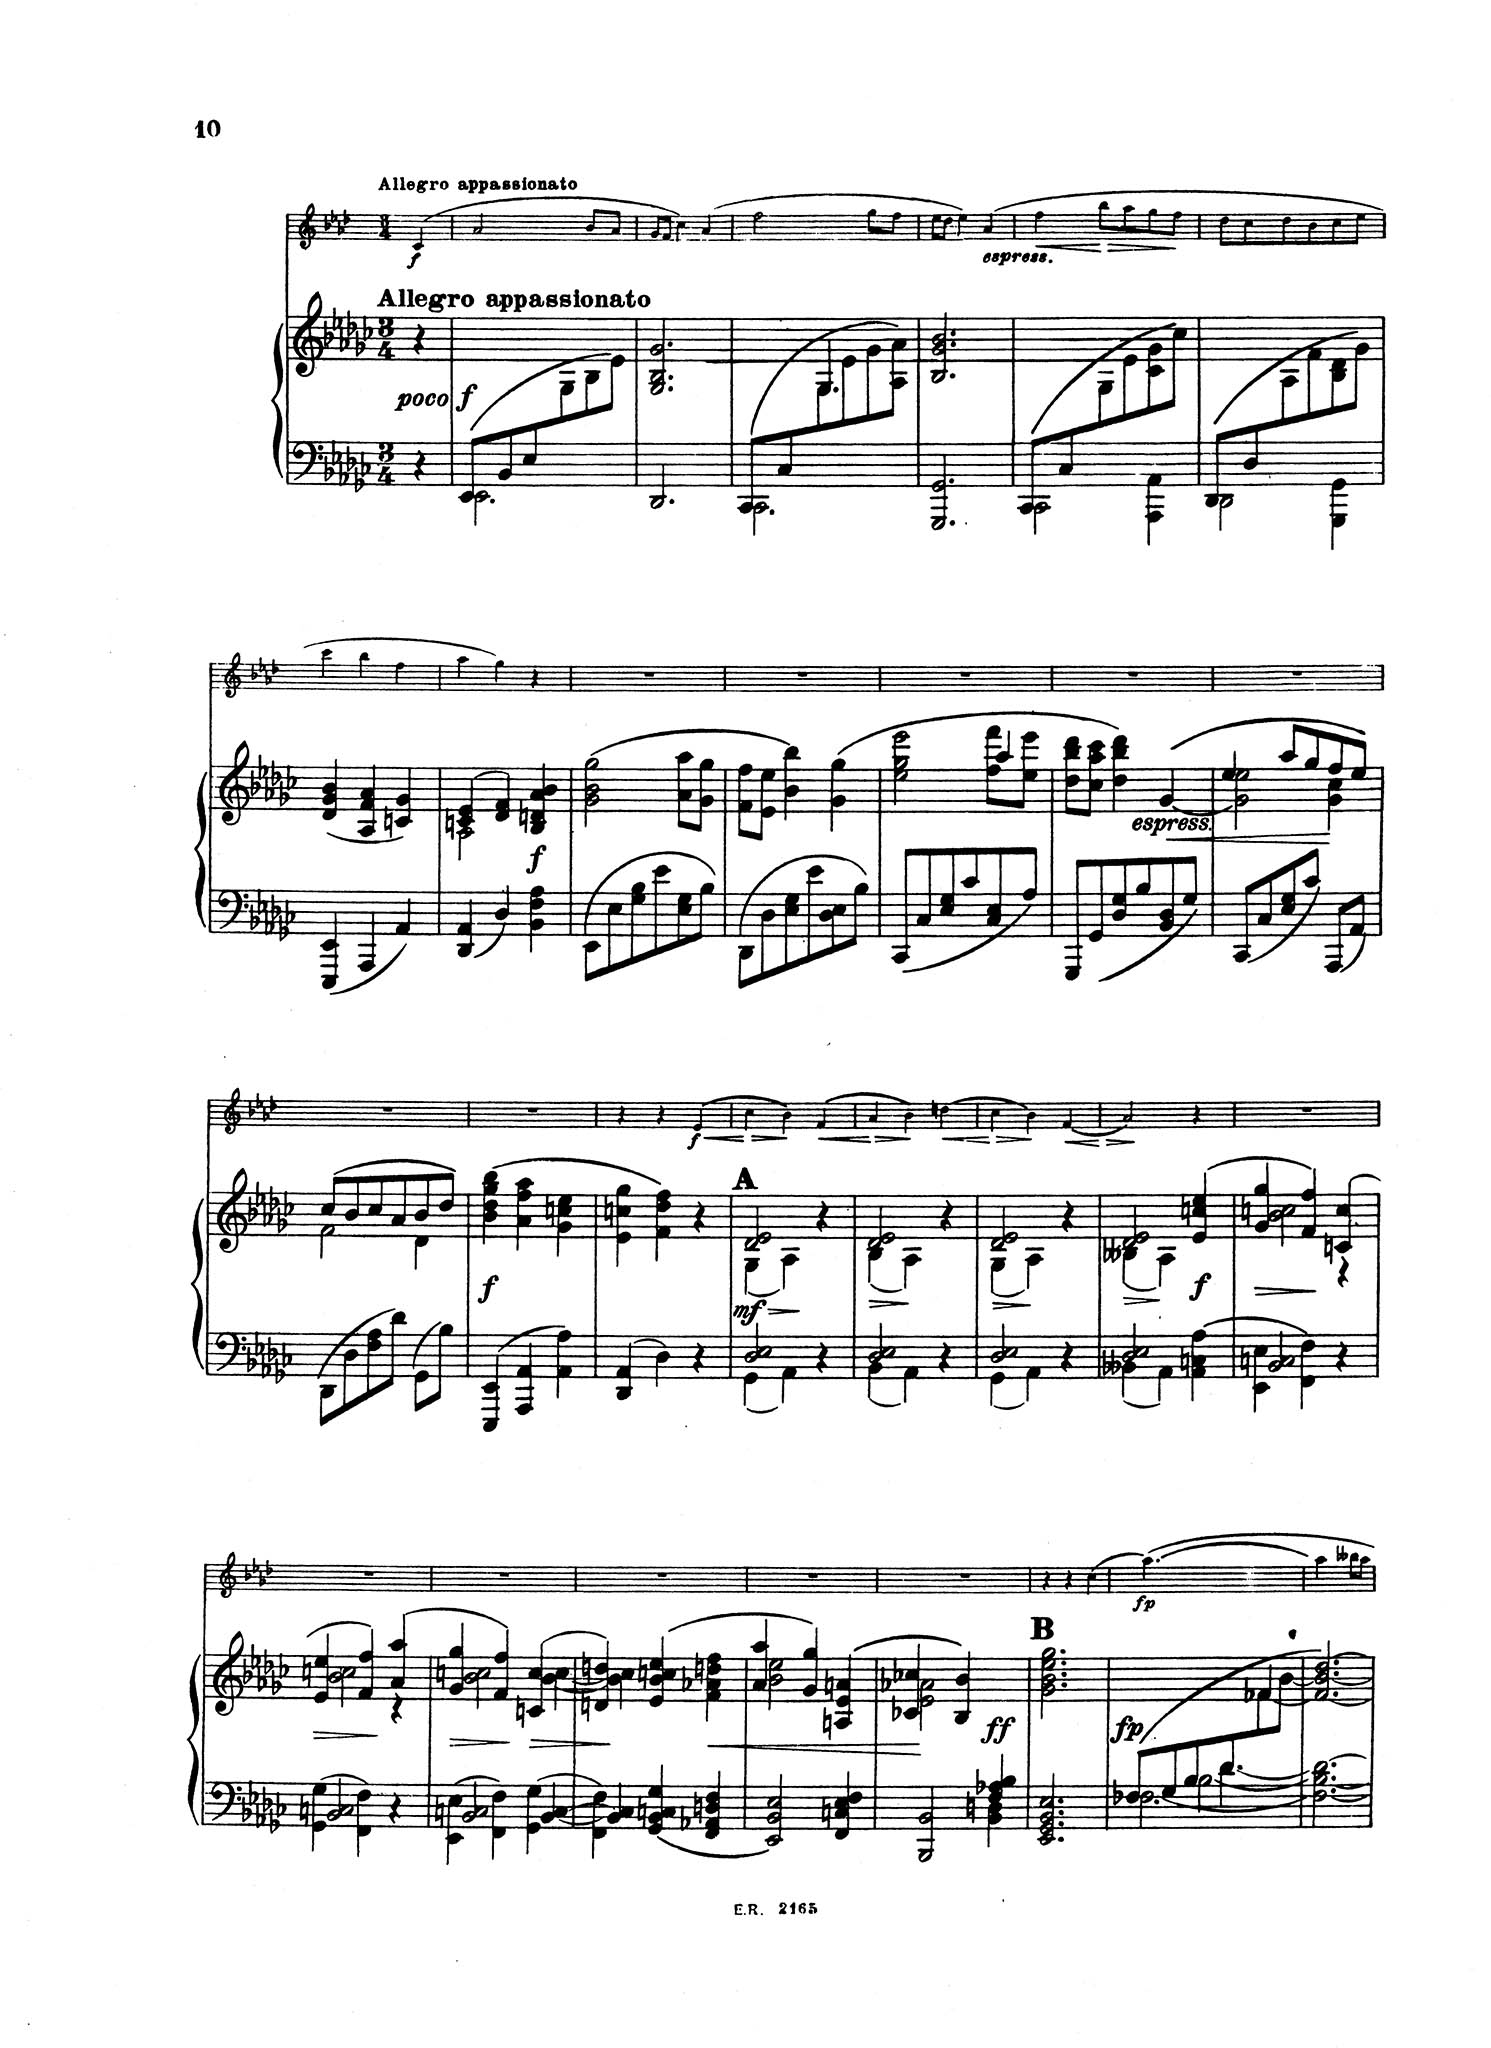 Sonata in E-flat Major, Op. 120 No. 2 - Movement 2